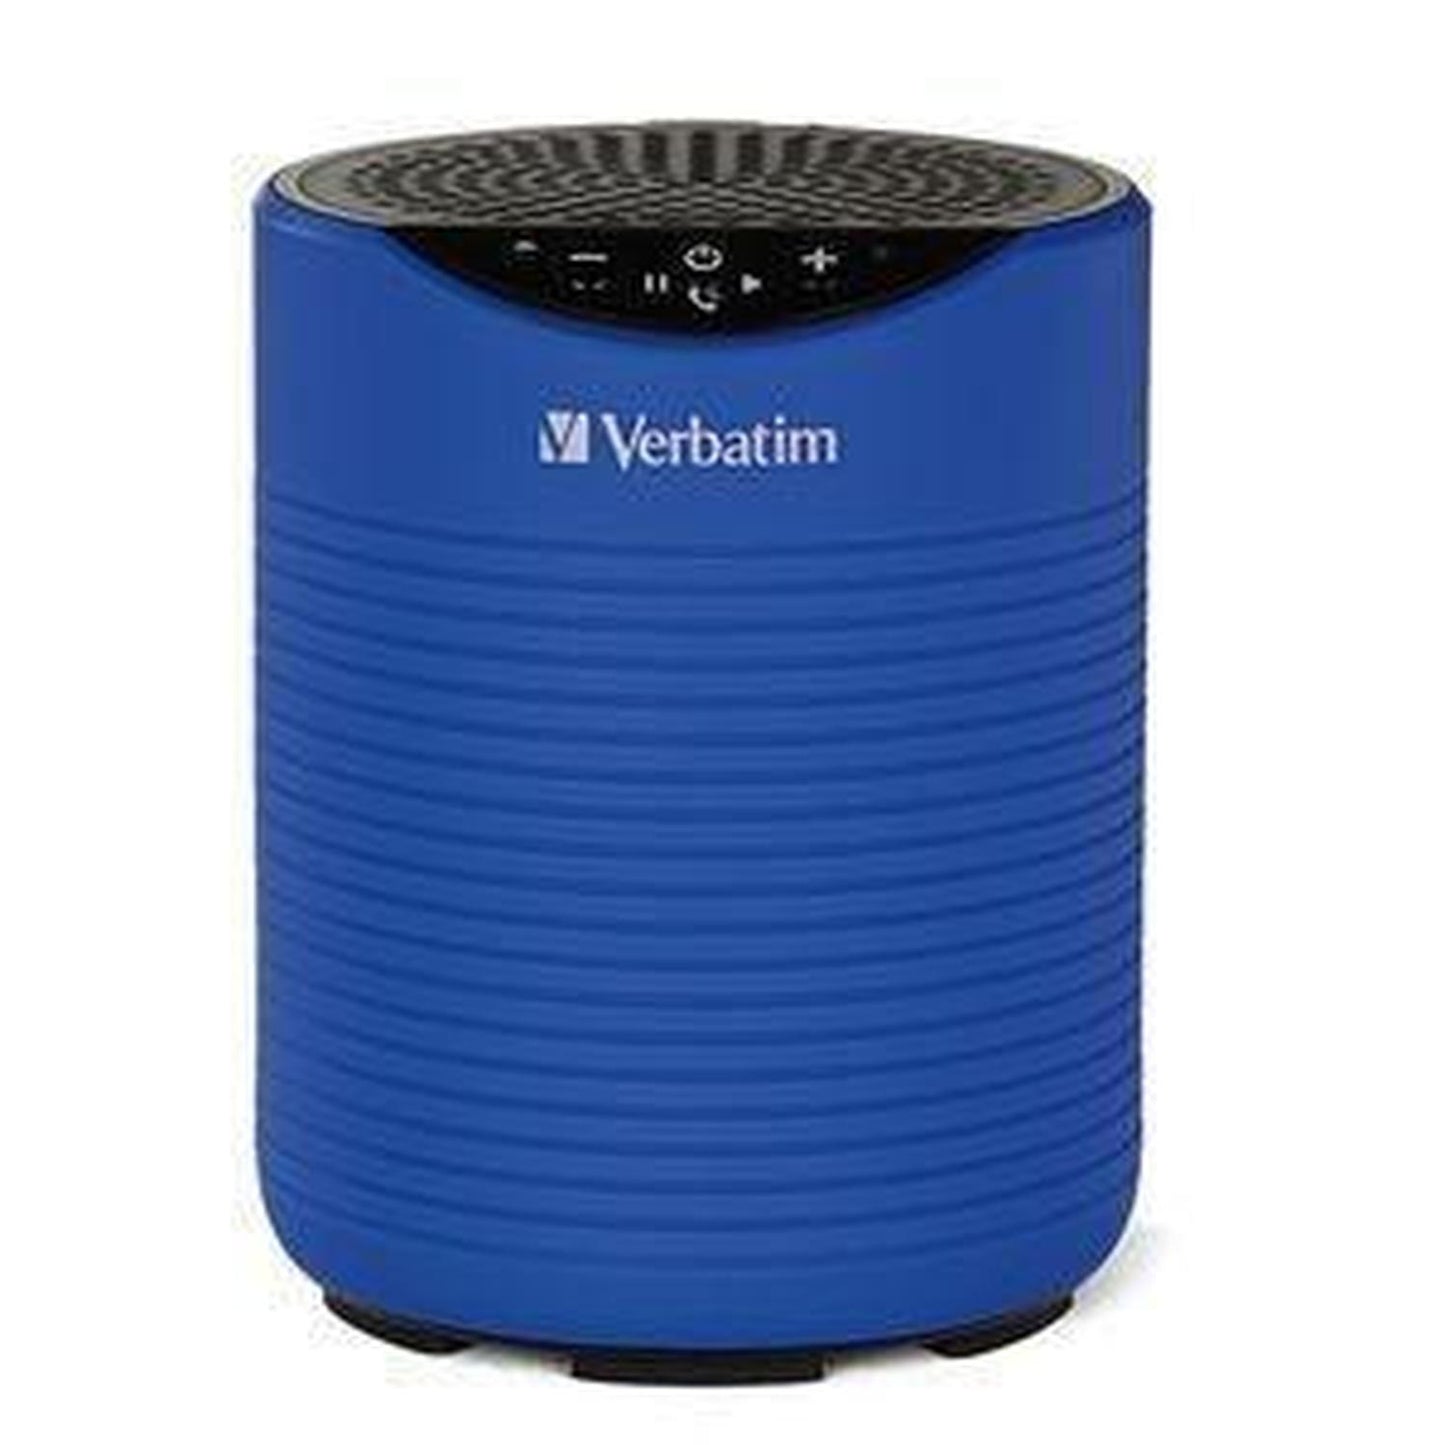 Verbatim Bocina Portátil , Bluetooth, Inalámbrico, Azul, Resistente al Agua/98592